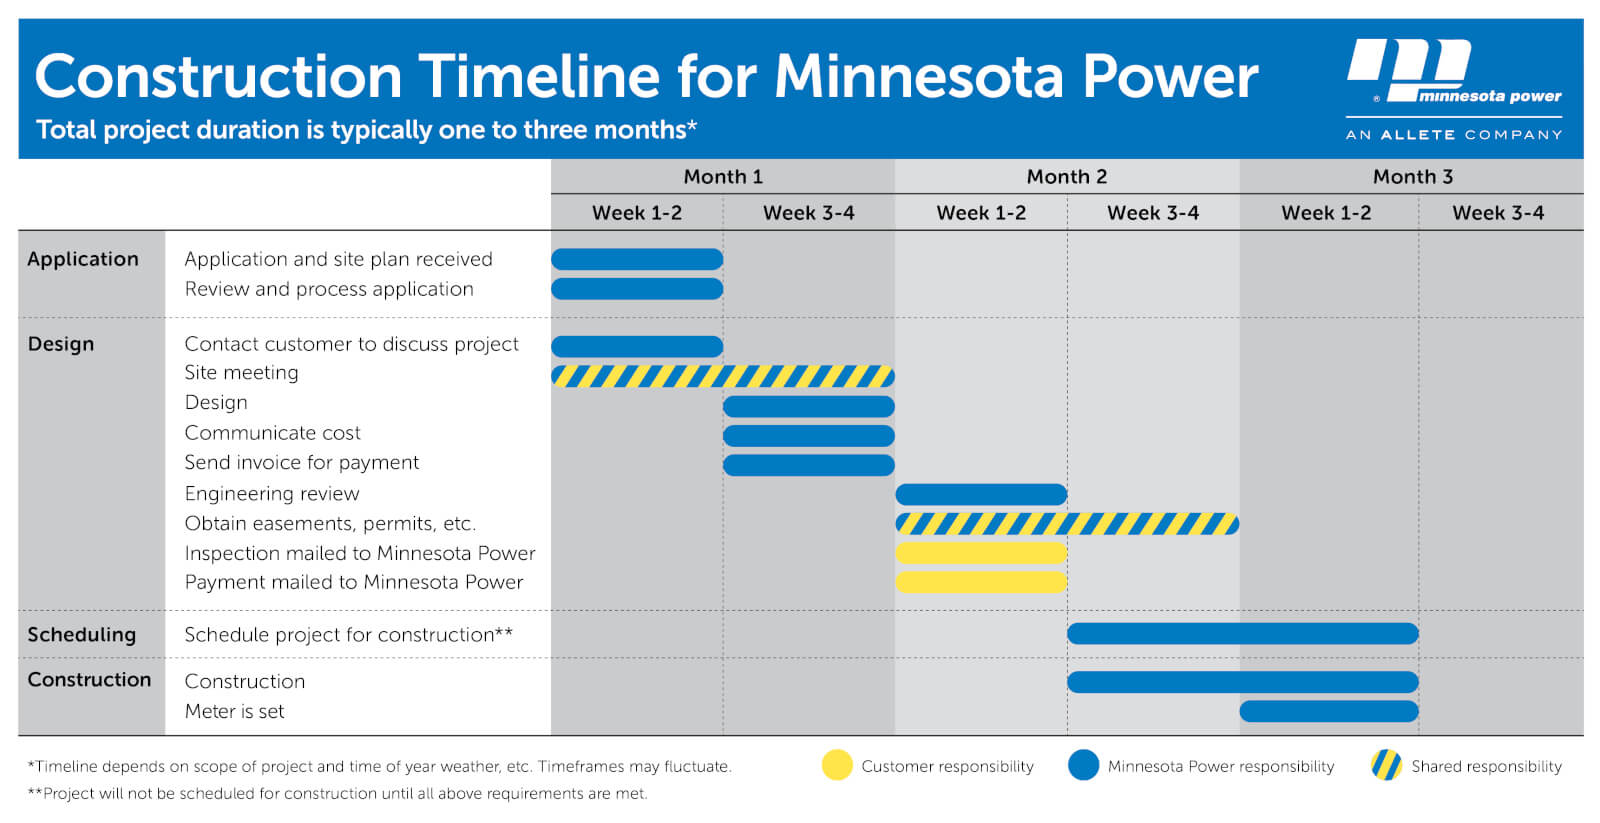 Construction Timeline for Minnesota Power